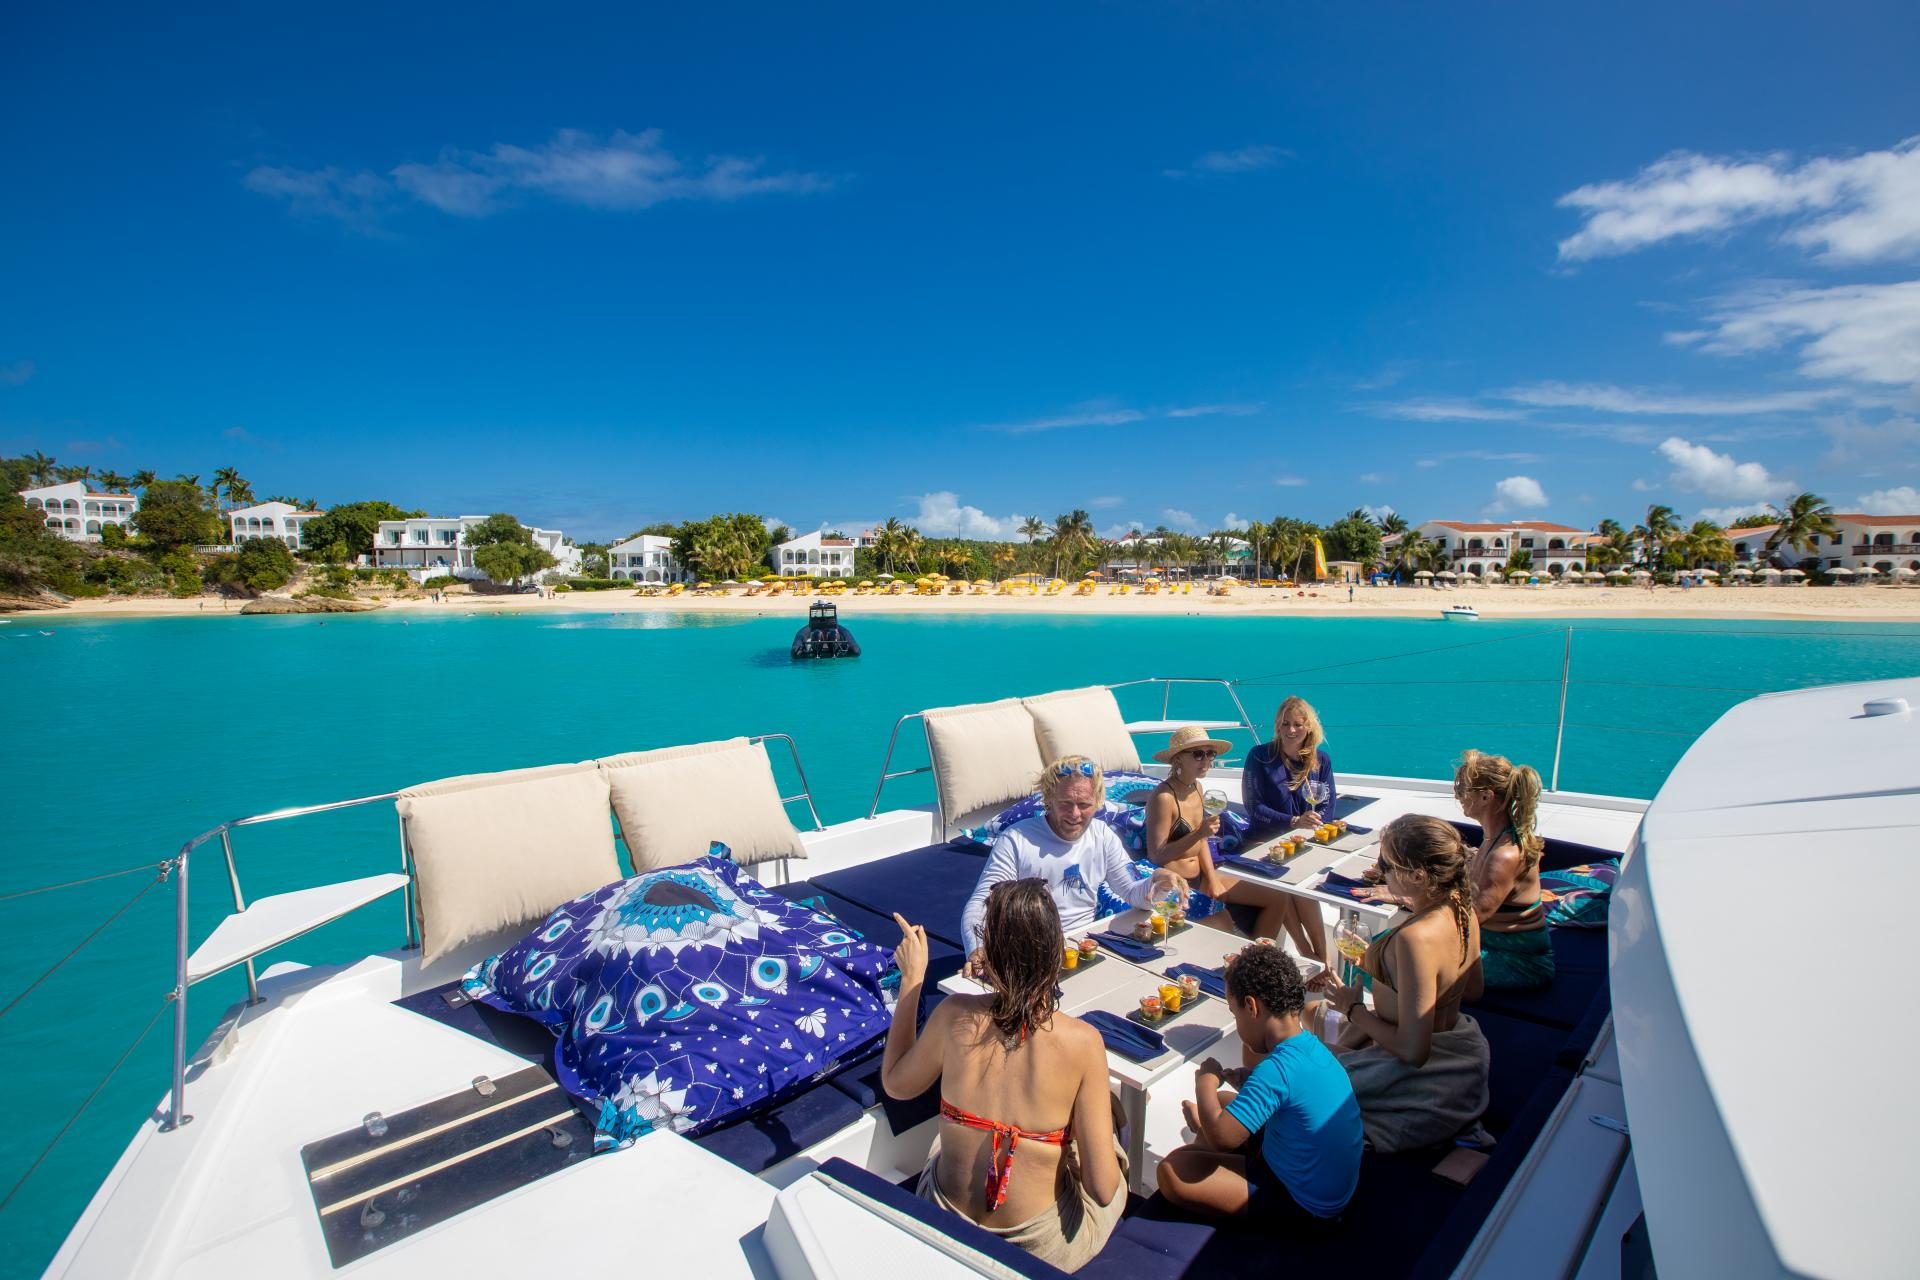 Gourmet Lunch on the Sea in St Maarten - Pyratz Charter Yacht